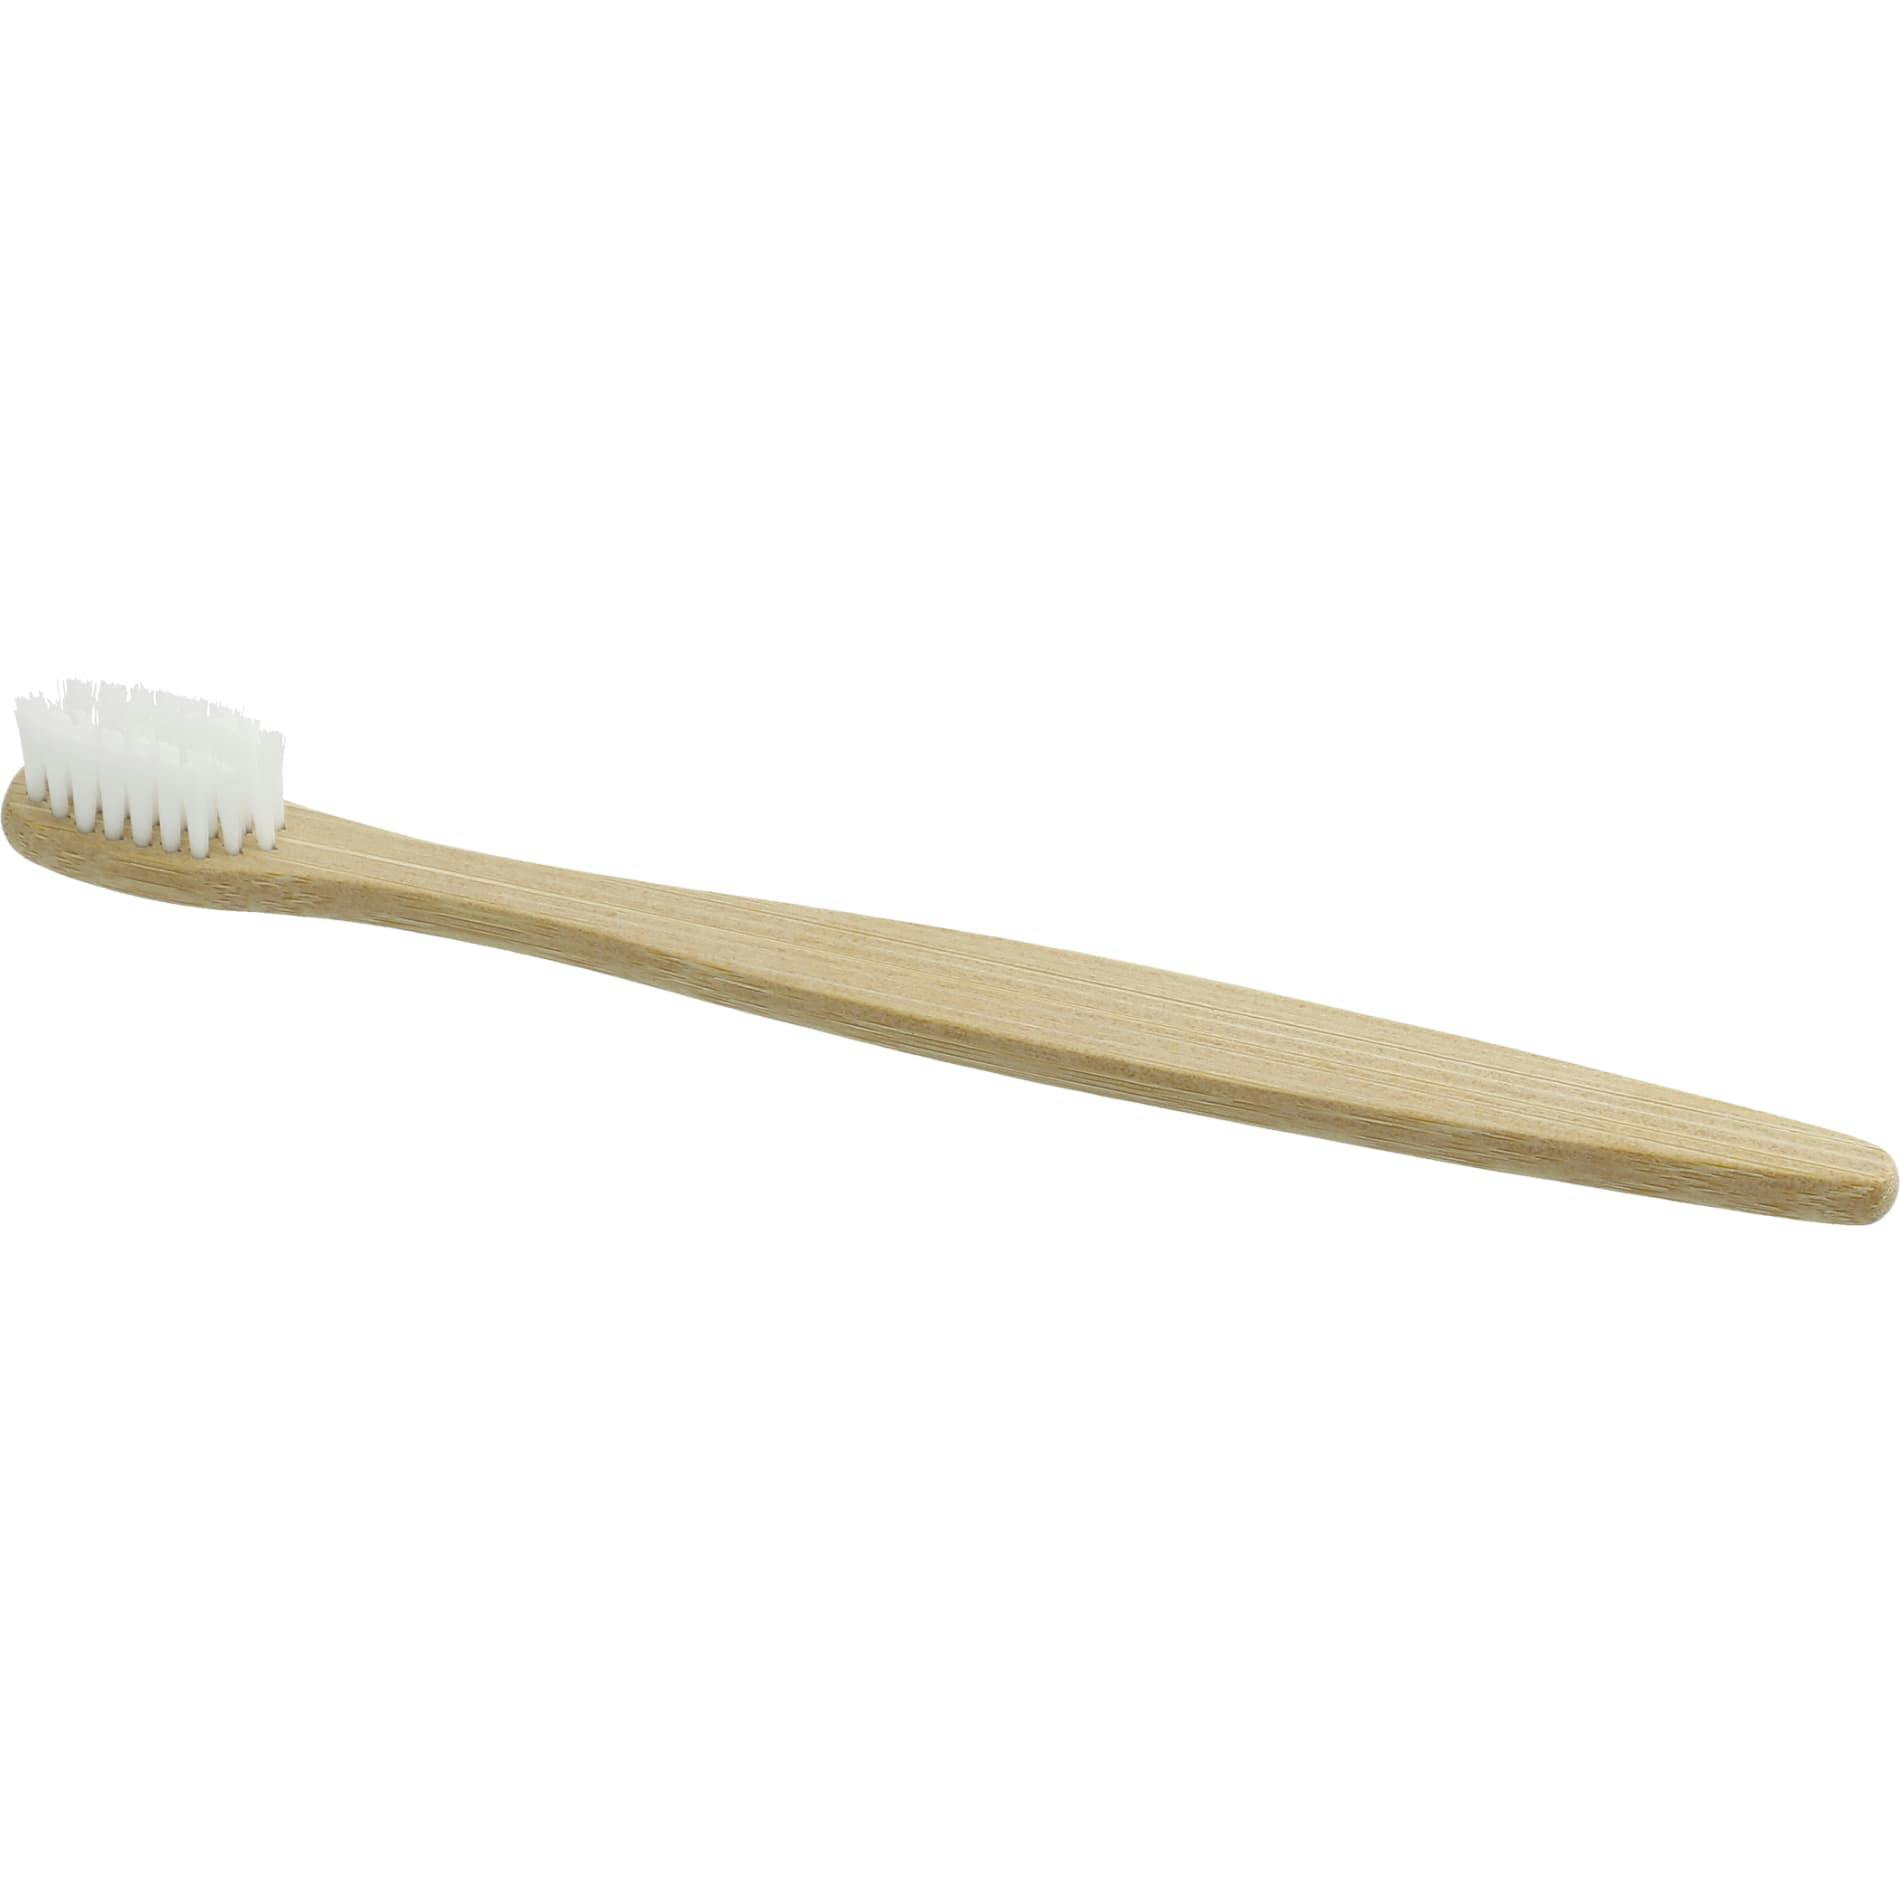 Bamboo Junior Toothbrush - additional Image 4